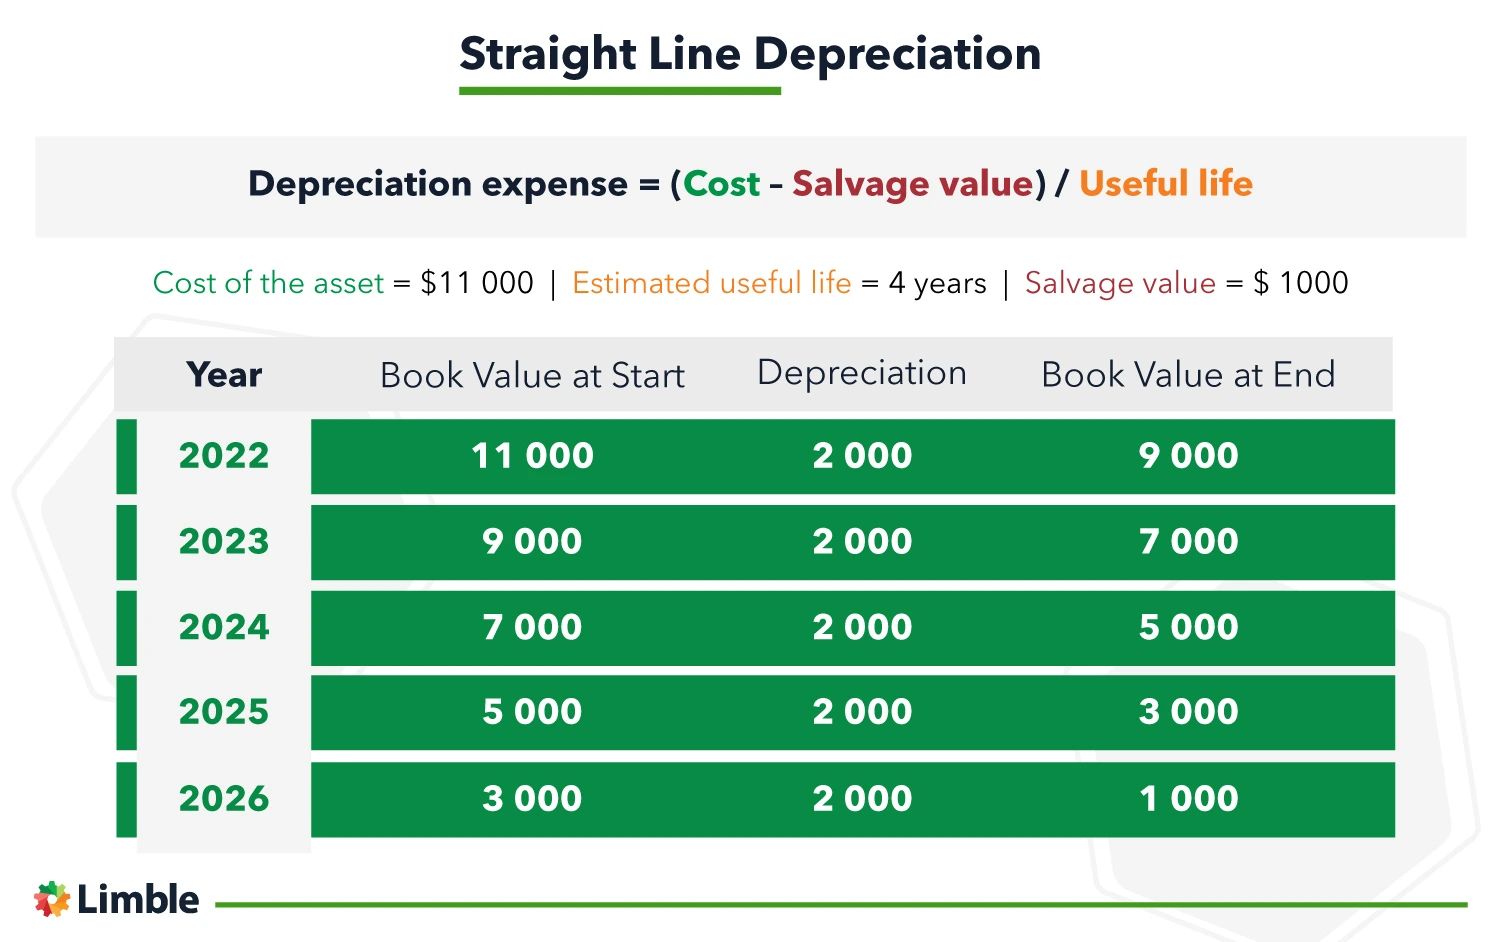 Straight Line Depreciation method